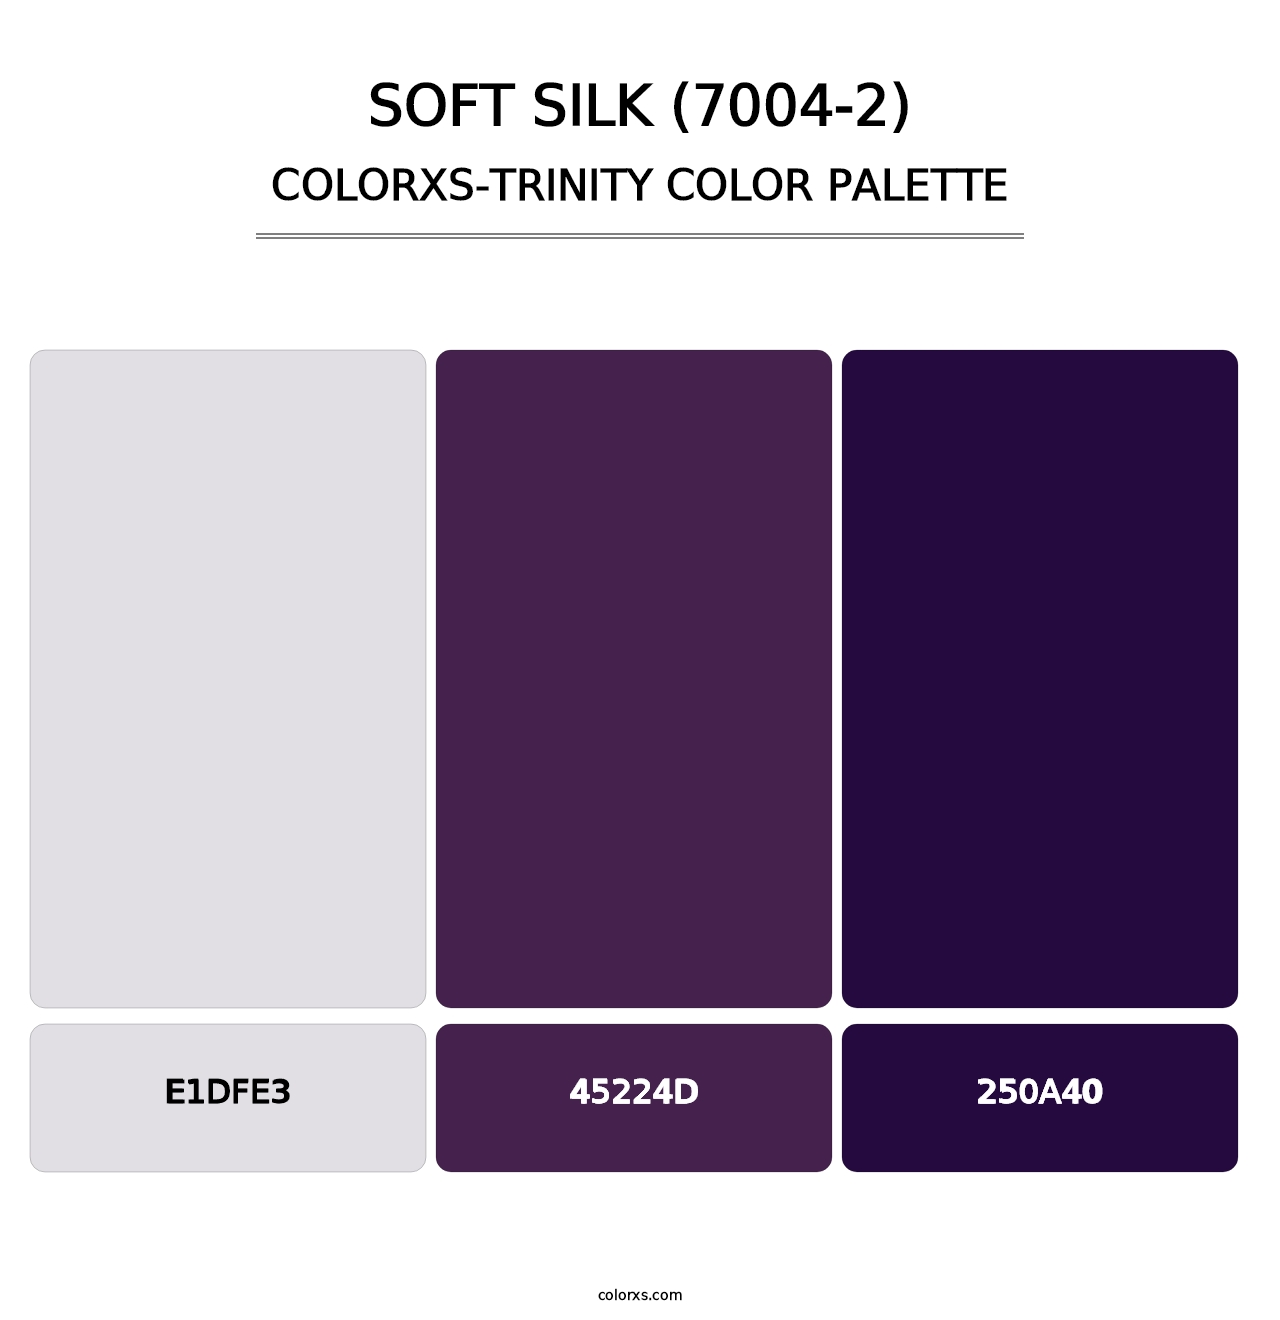 Soft Silk (7004-2) - Colorxs Trinity Palette